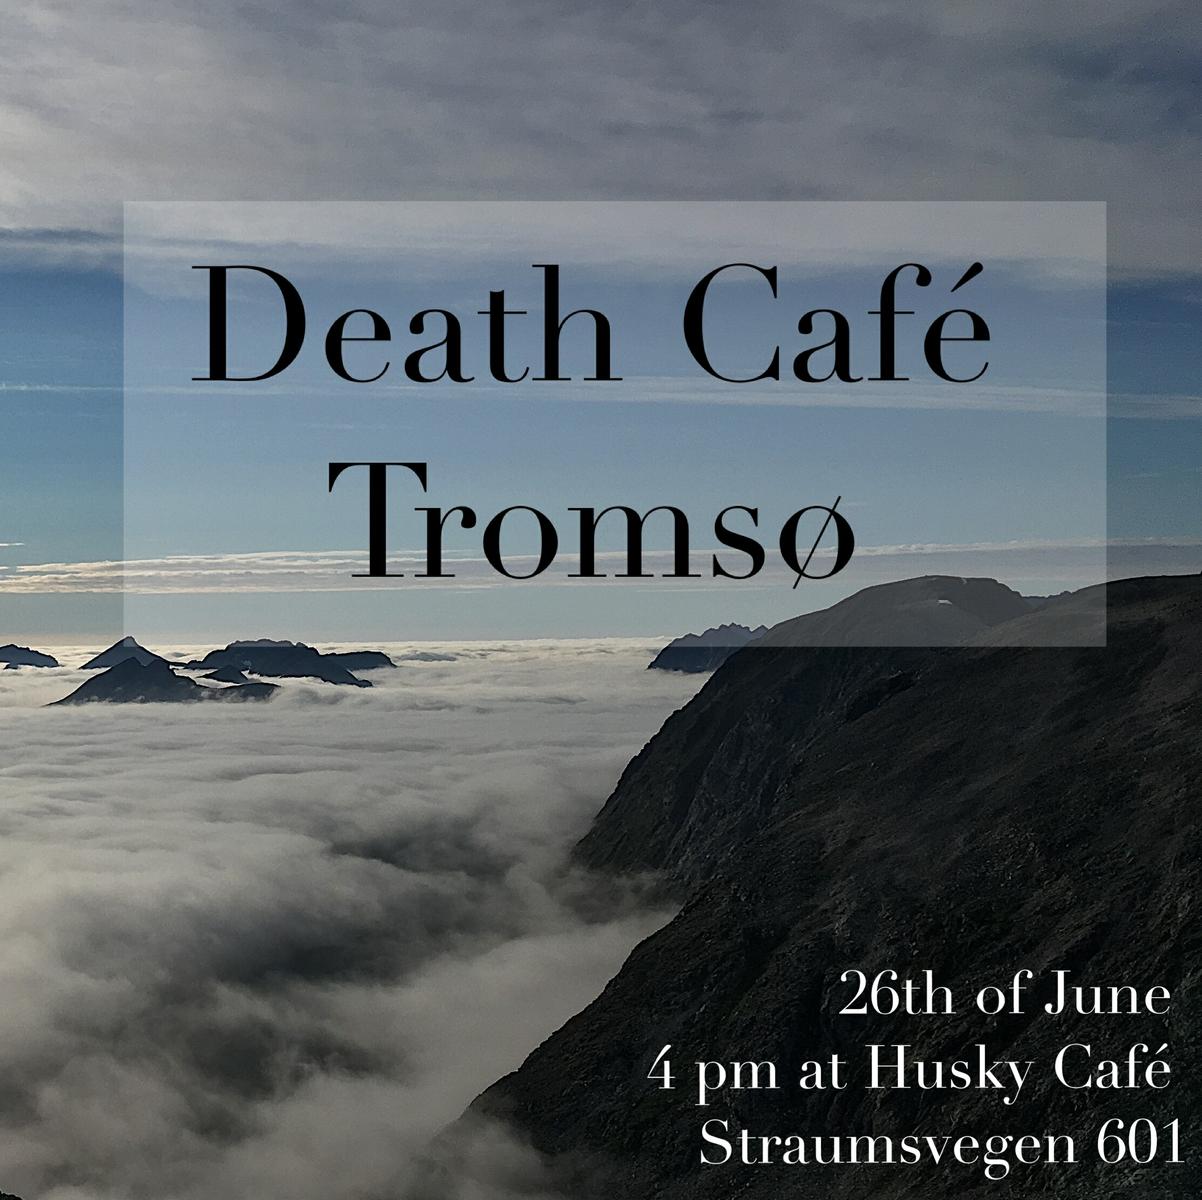 Death Cafe Tromsø